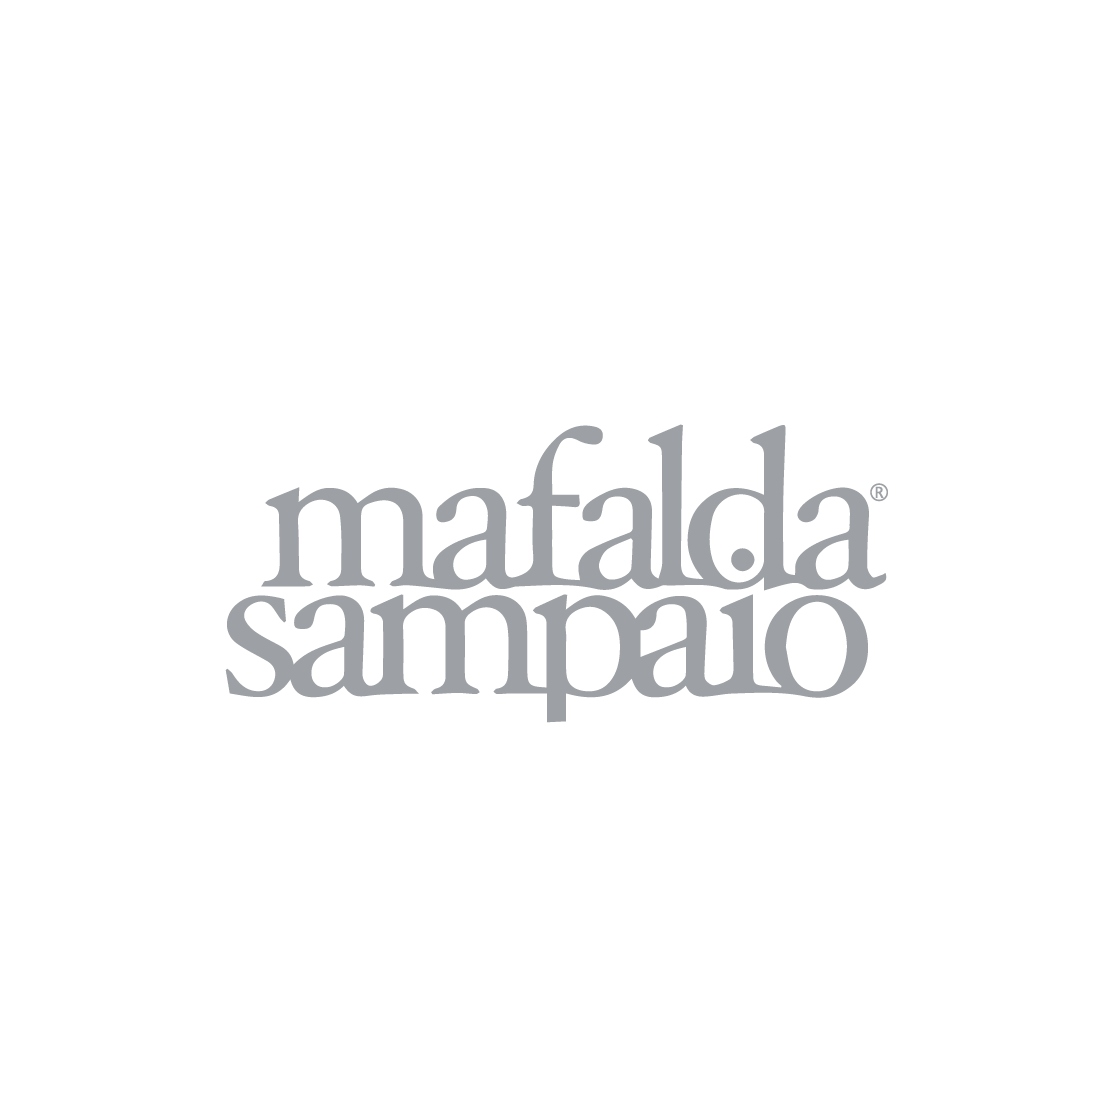 Mafalda Sampaio